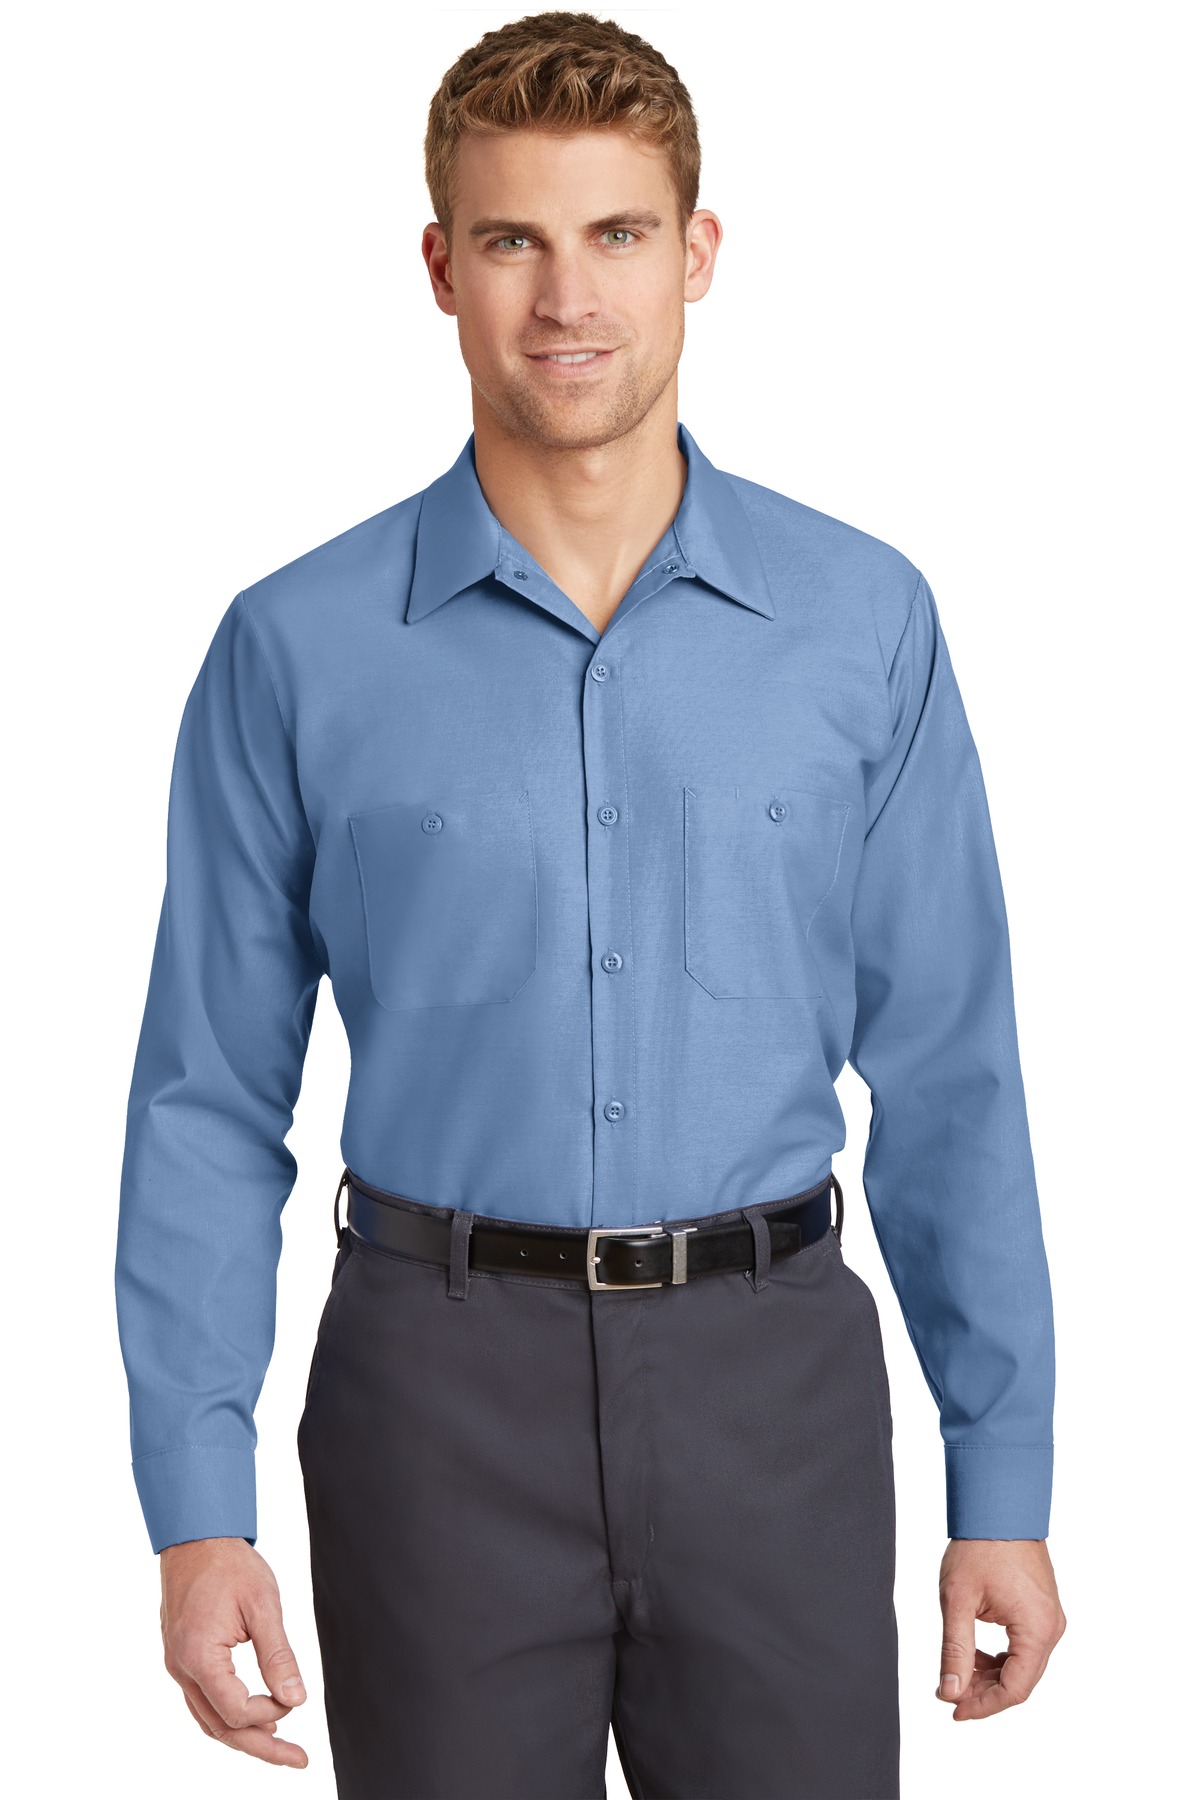 SP14 Industrial Long Sleeve Work Shirt